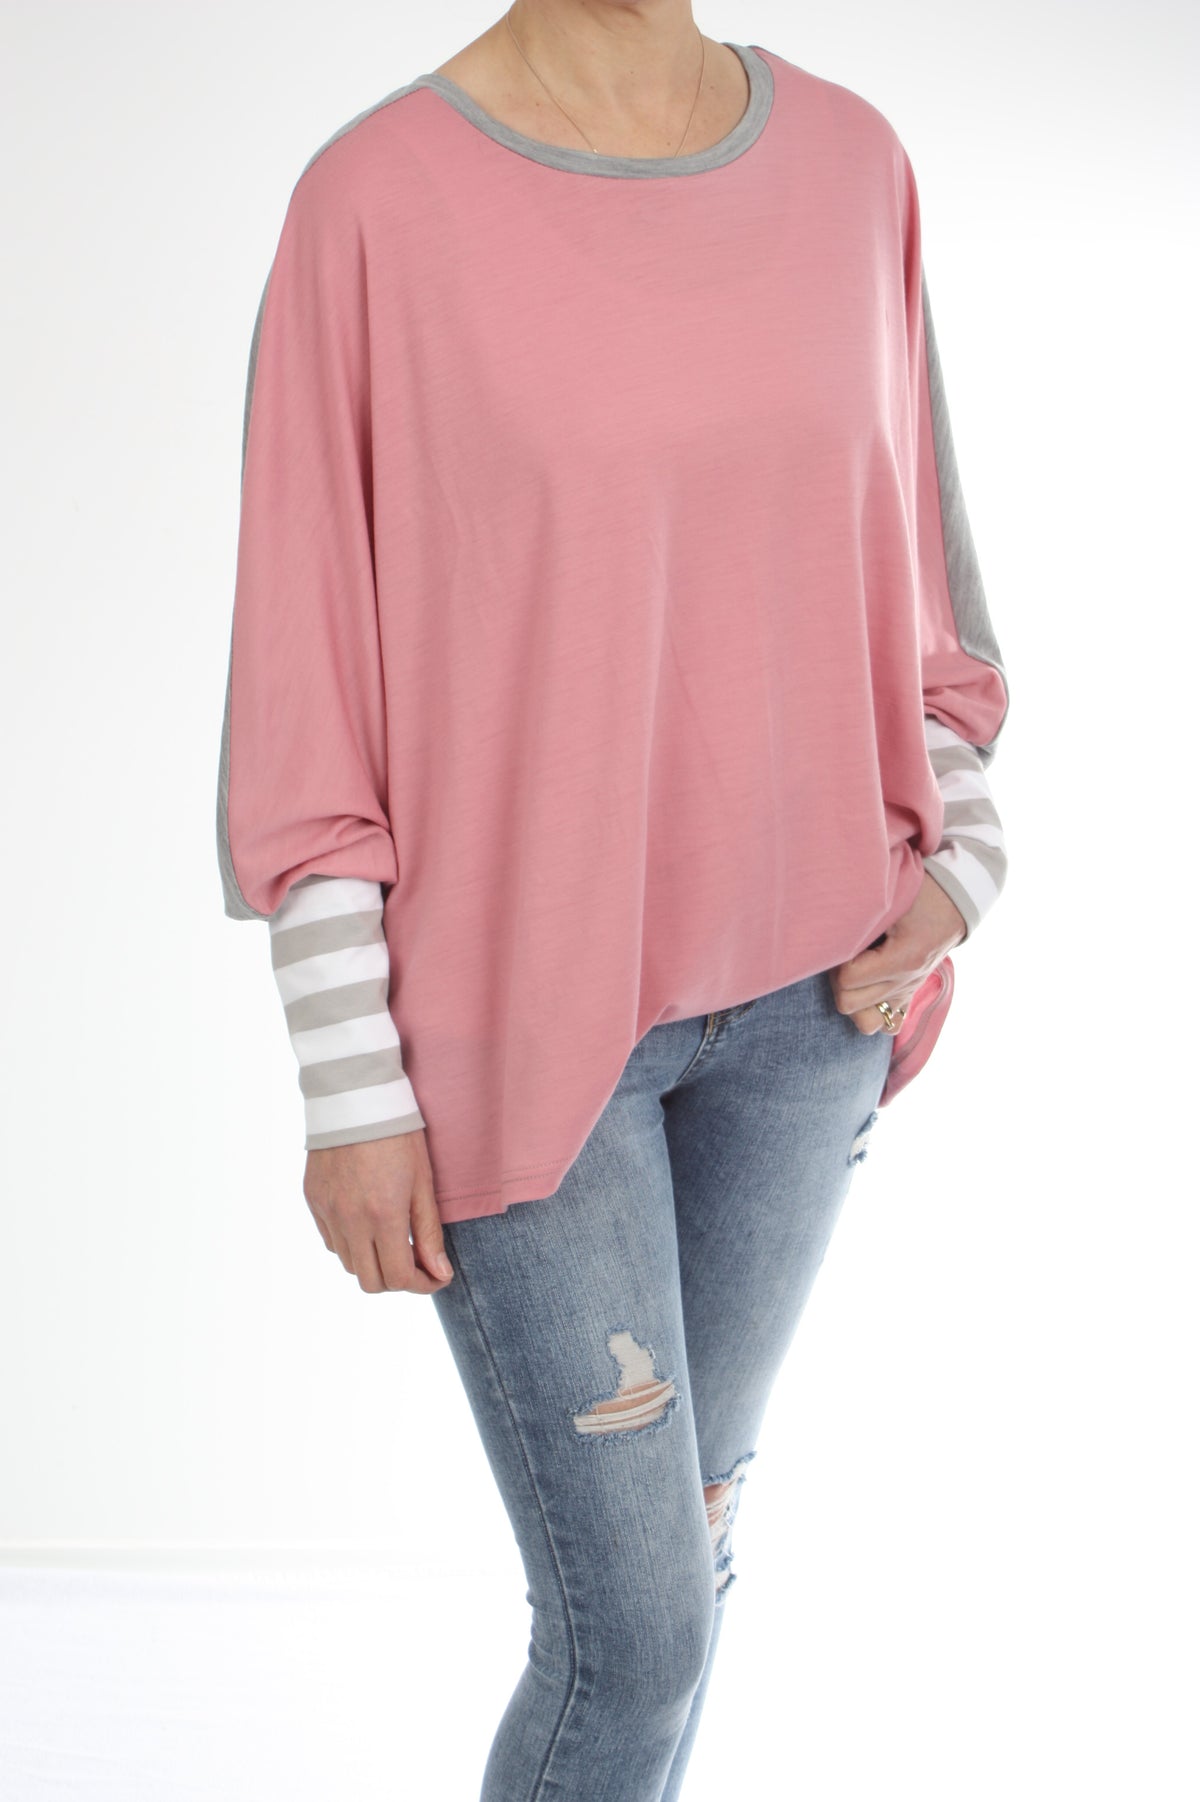 Alexa Top - Merino - Reversible Pink/Grey - Wide Stripe Cuff - Pre-Order